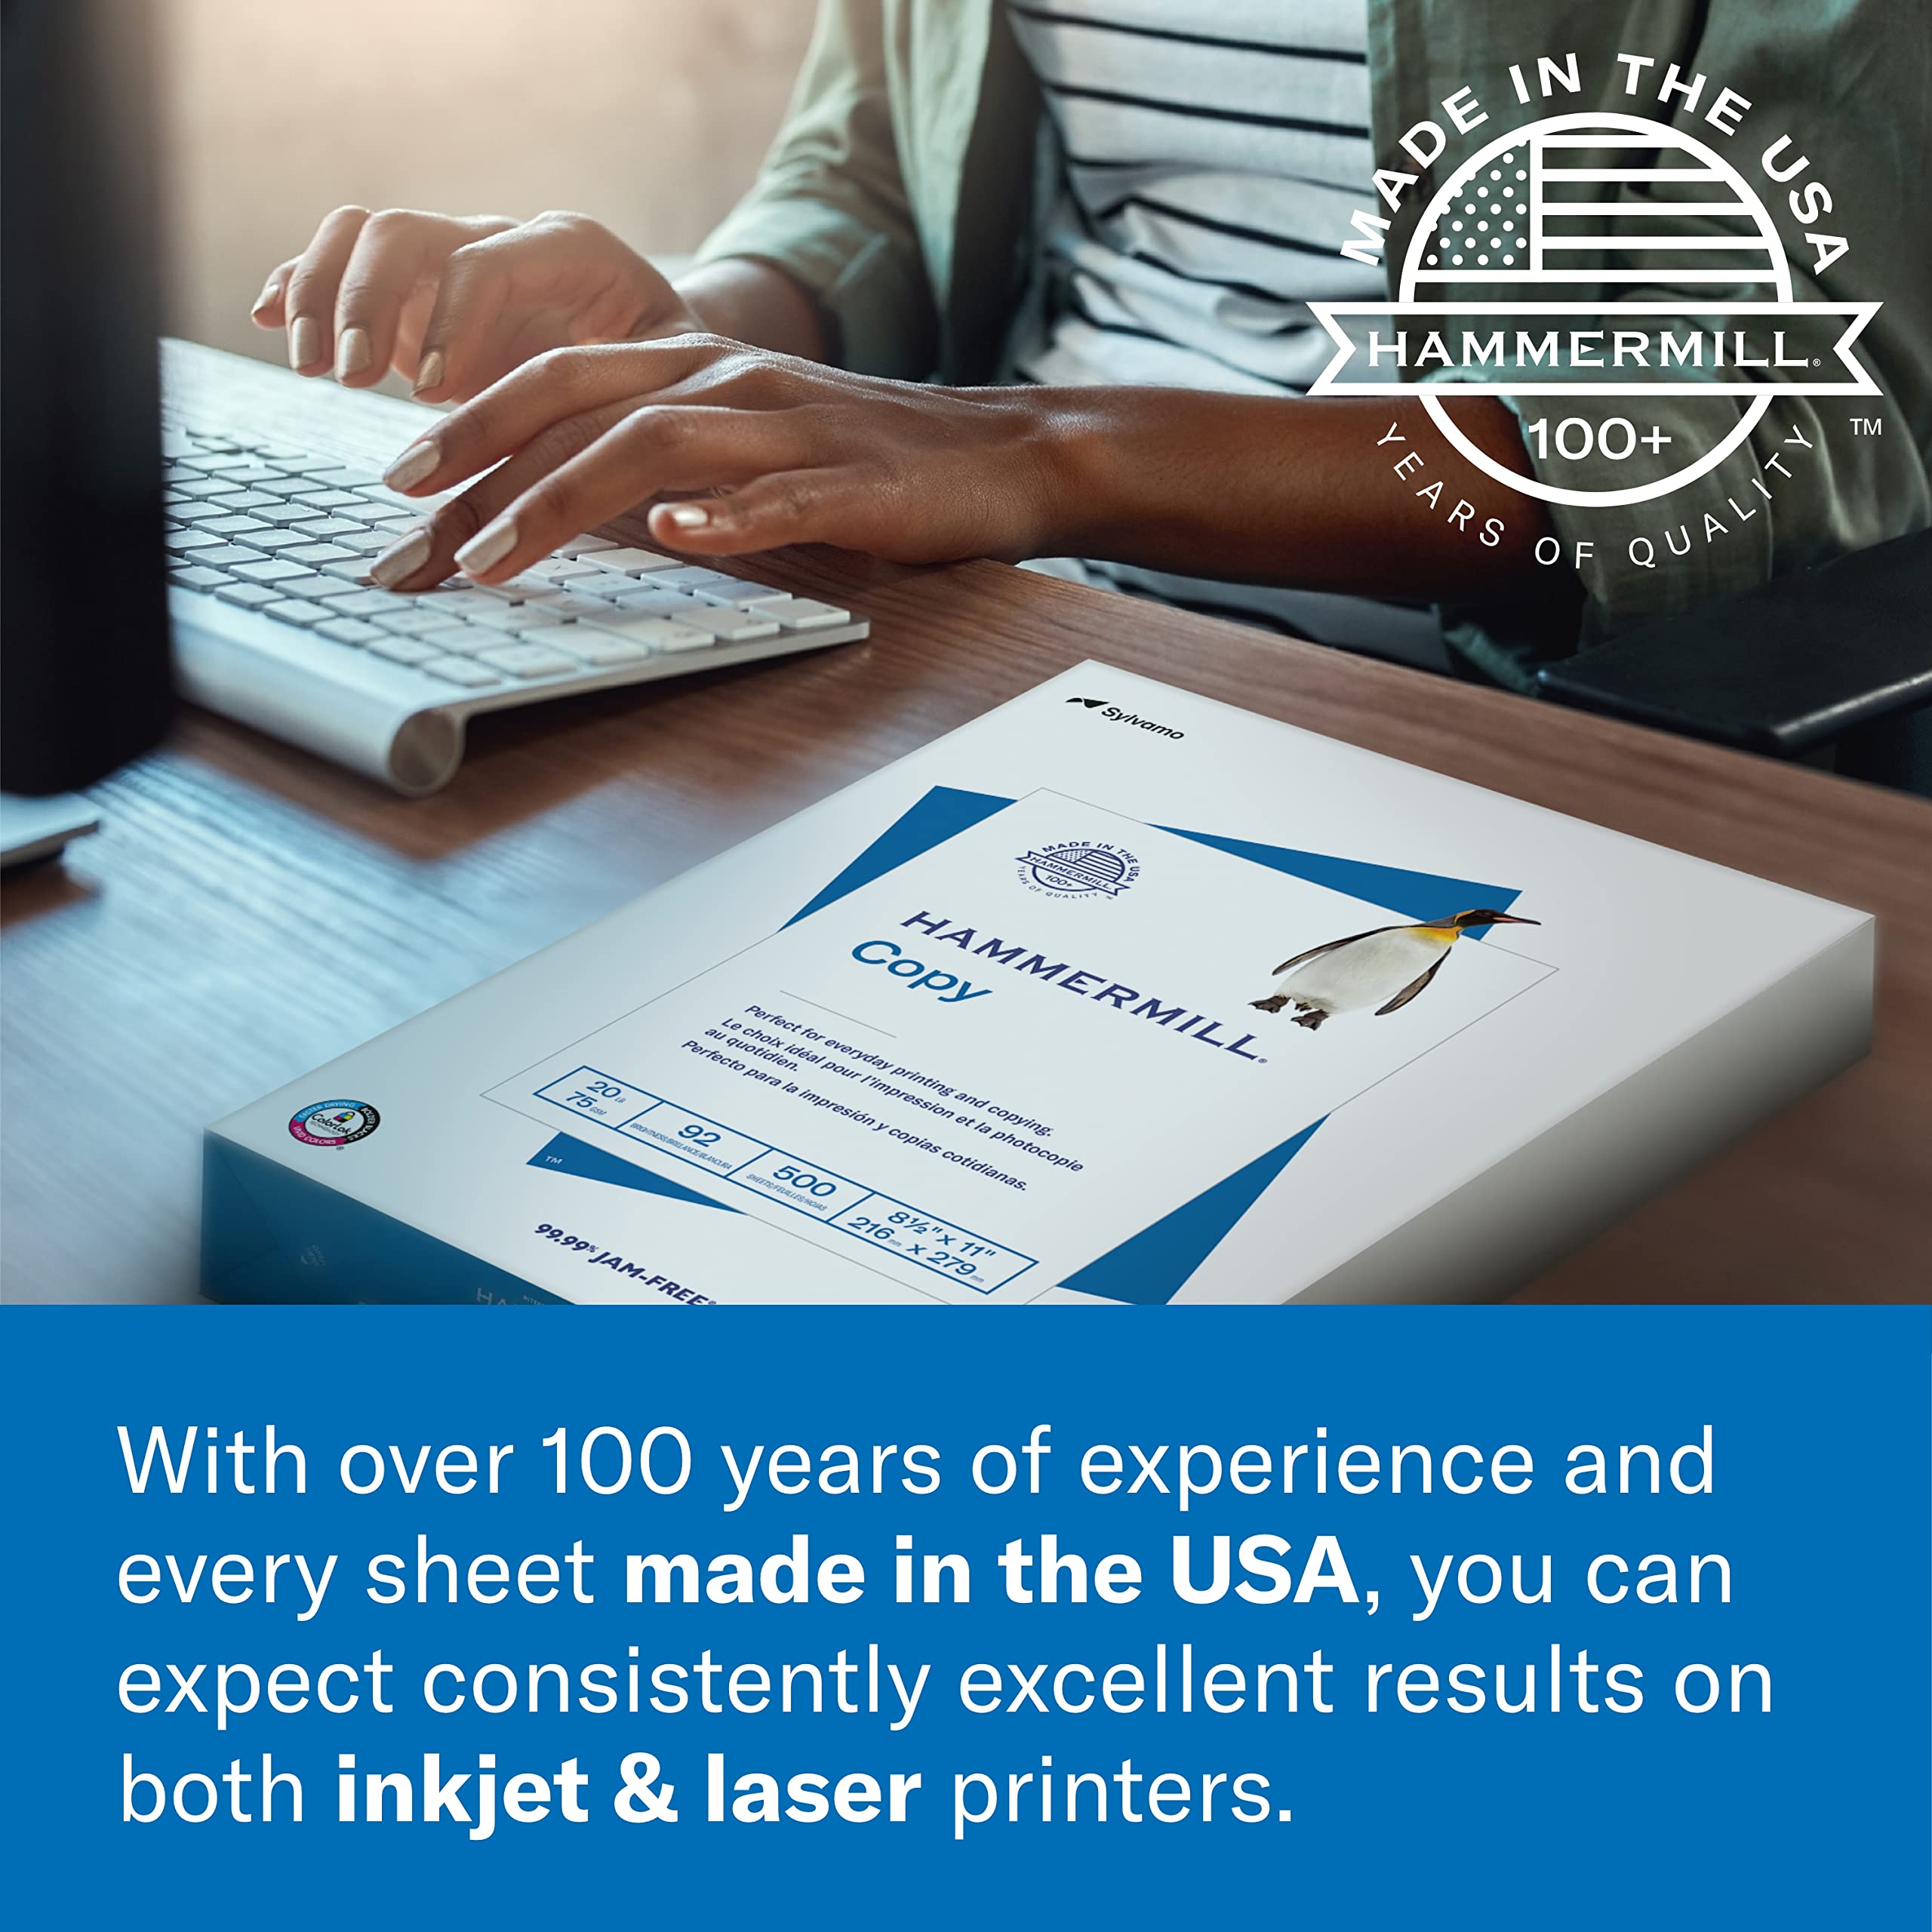 Hammermill Printer Paper, Premium Color 32 lb Copy Paper, 8.5 x 11 - 8 Ream | 4000 Sheets - 100 Bright, Made in the USA, 102630C